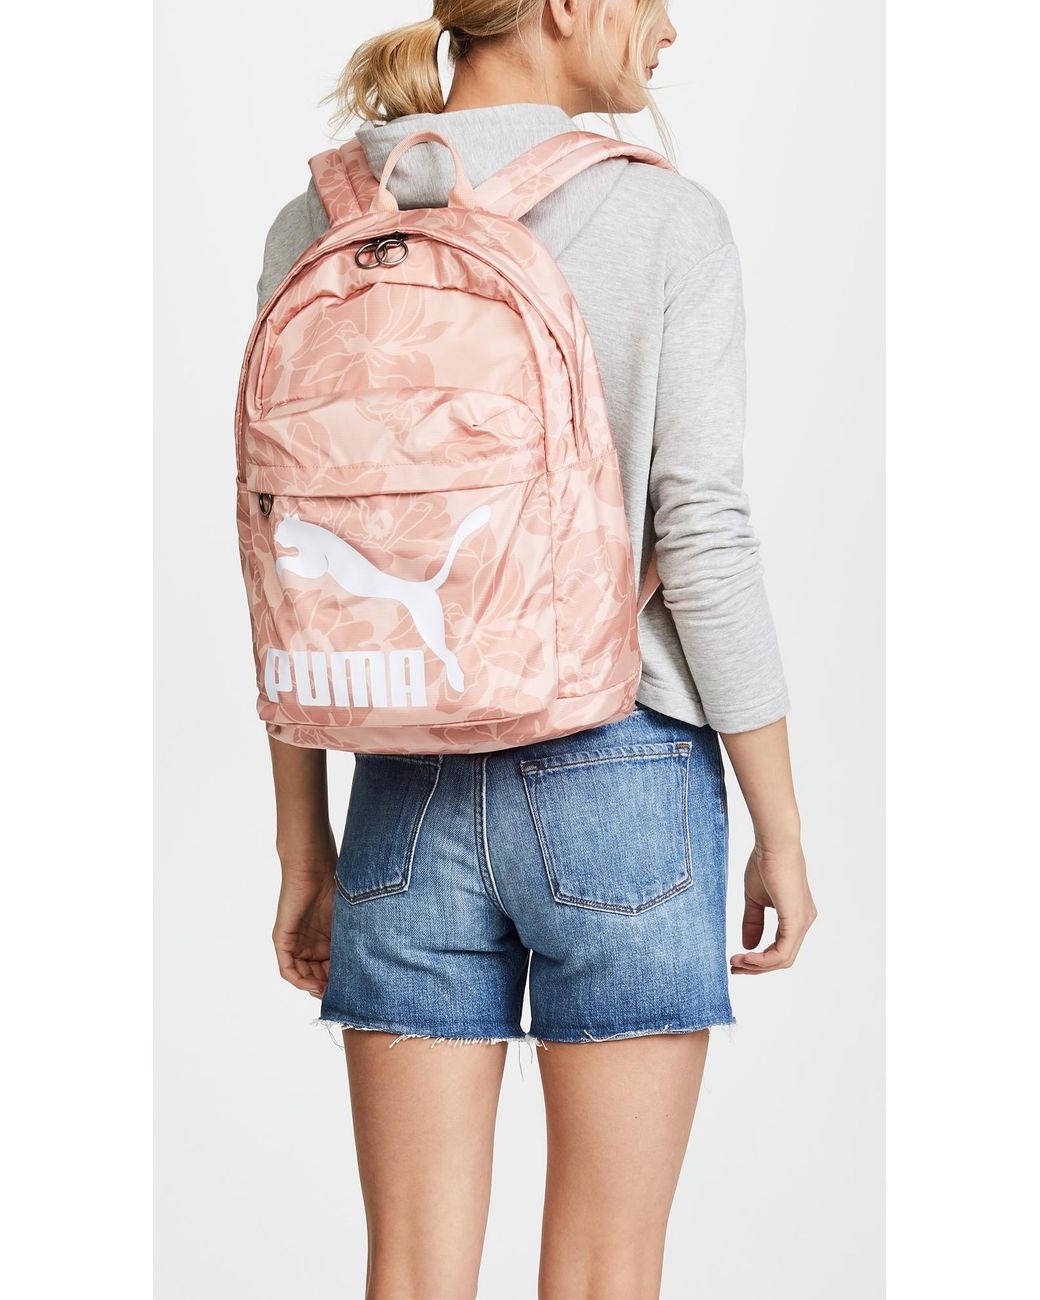 PUMA Originals Backpack Rucksack in Pink | Lyst